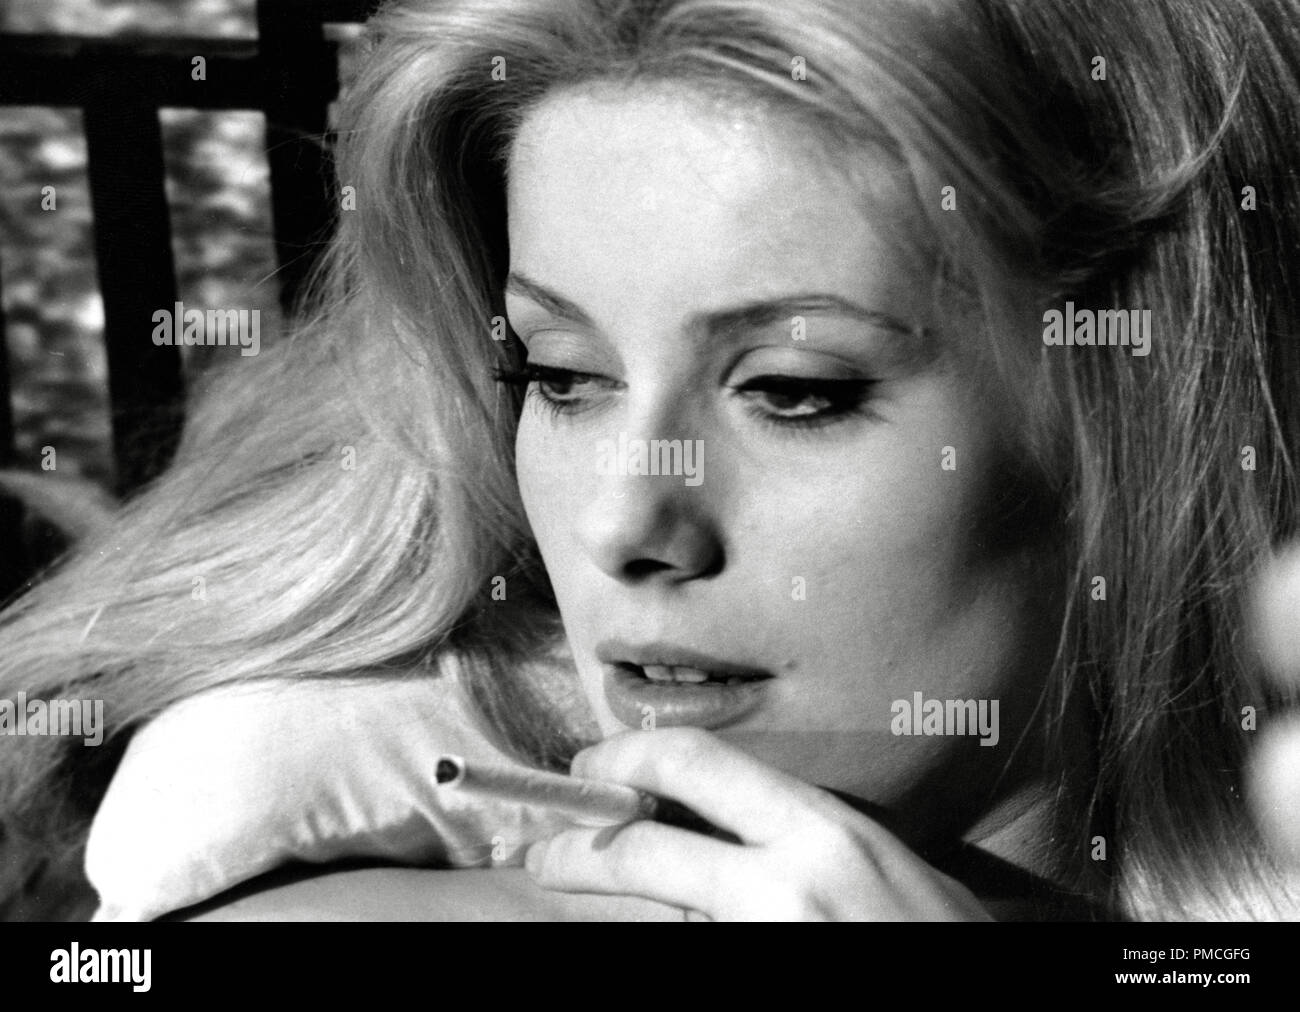 Catherine deneuve smoking hi-res stock photography and images - Alamy